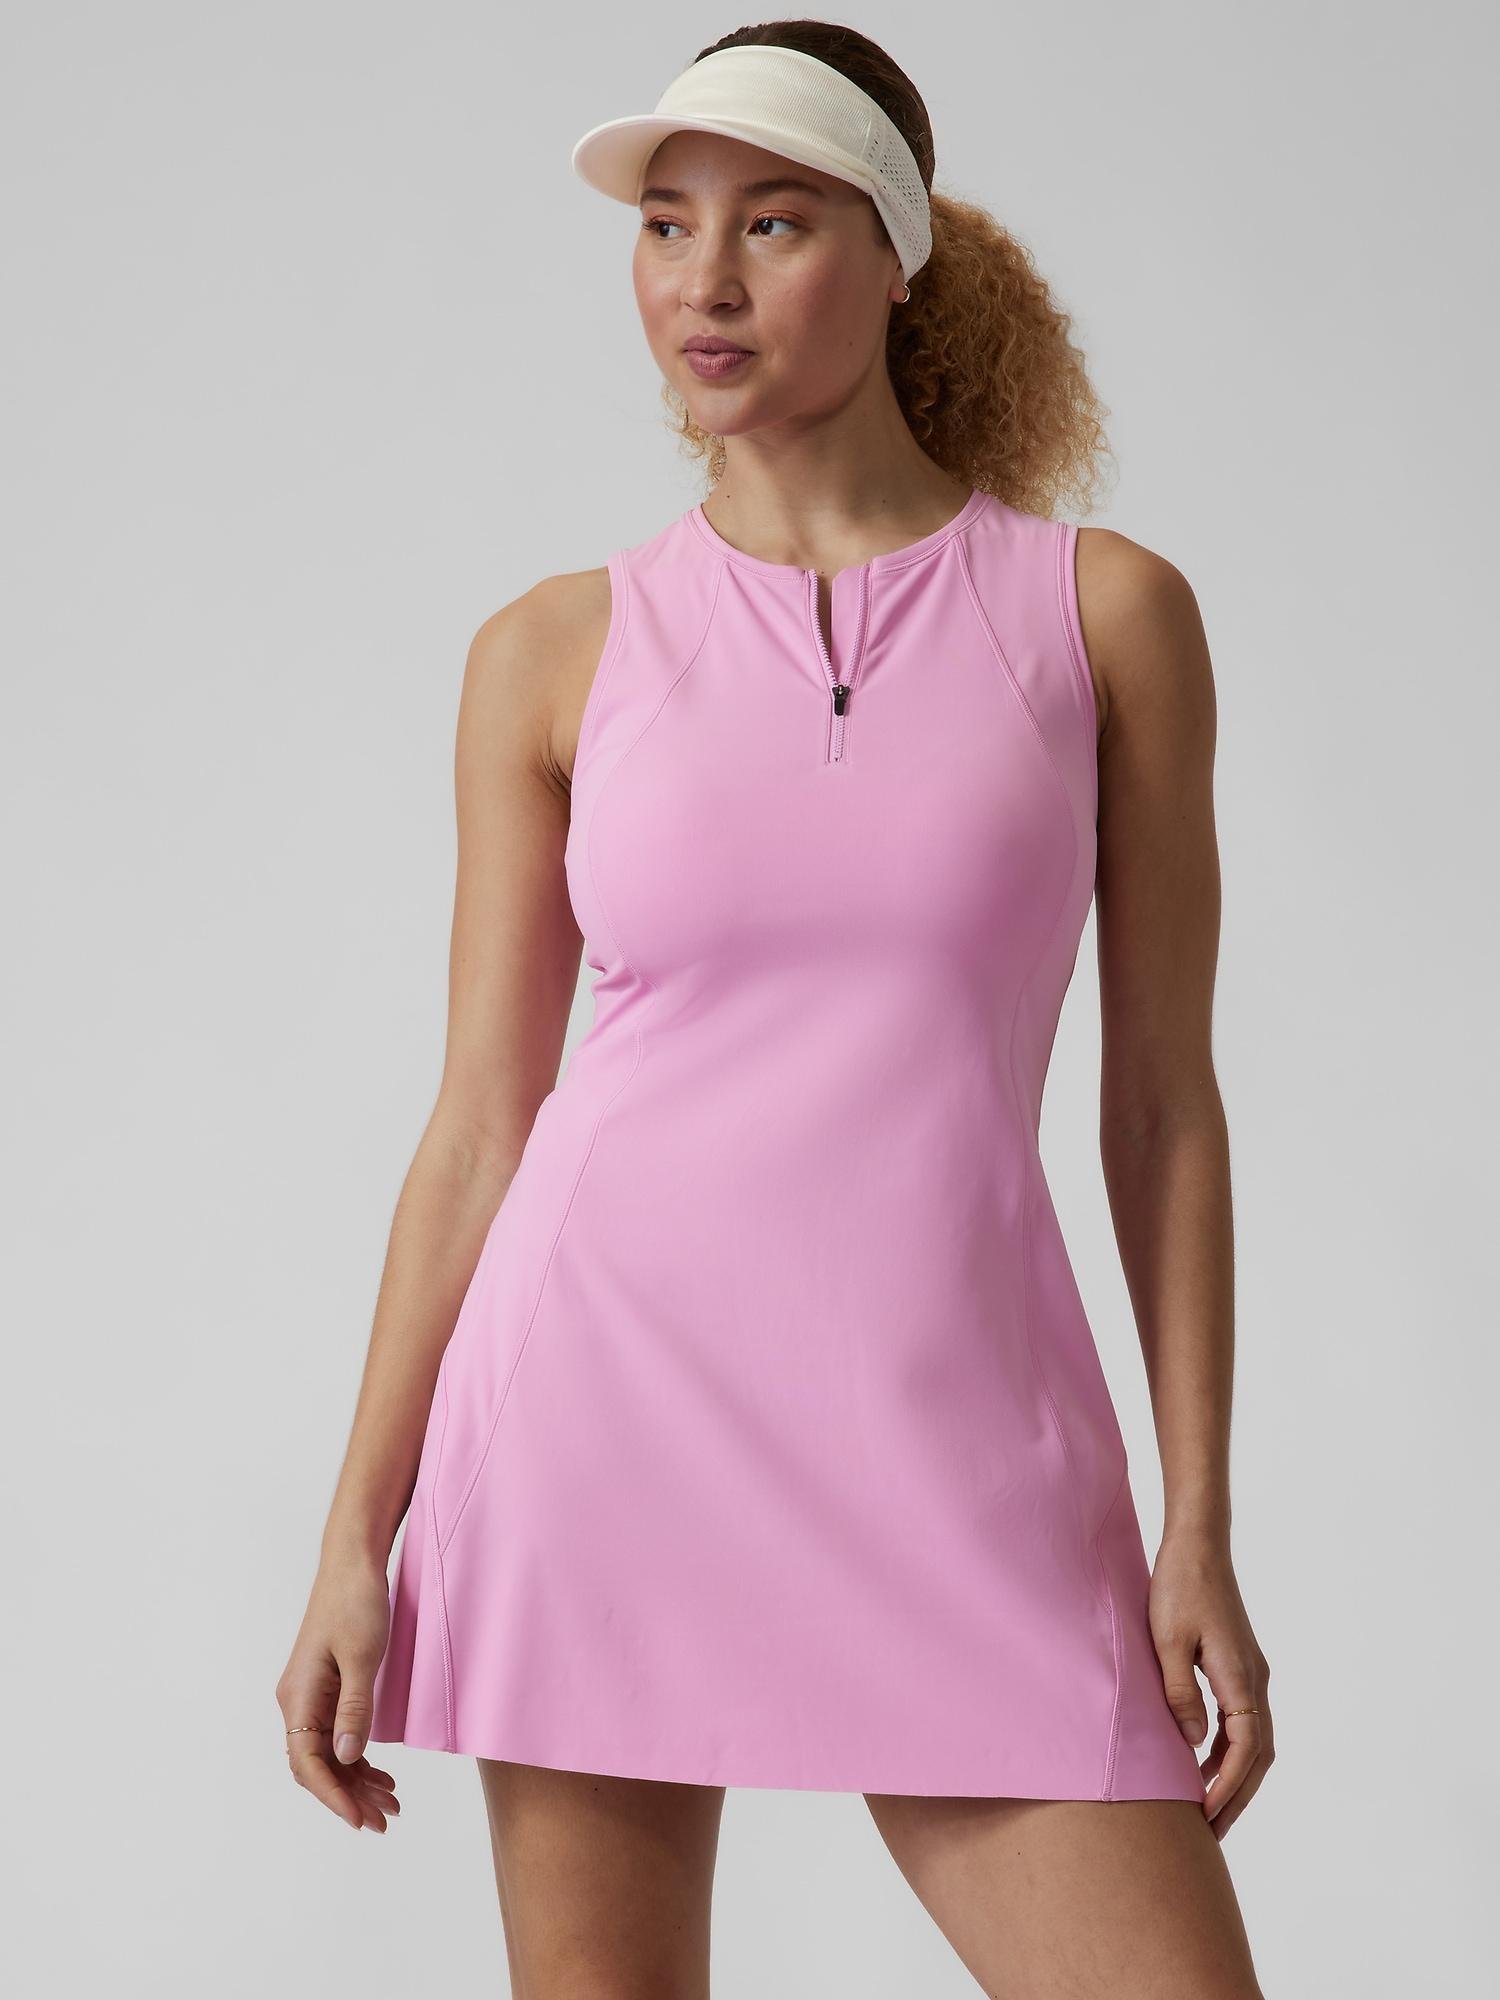 athleta-Quartz-Pink-Ace-Tennis-Dress.jpeg